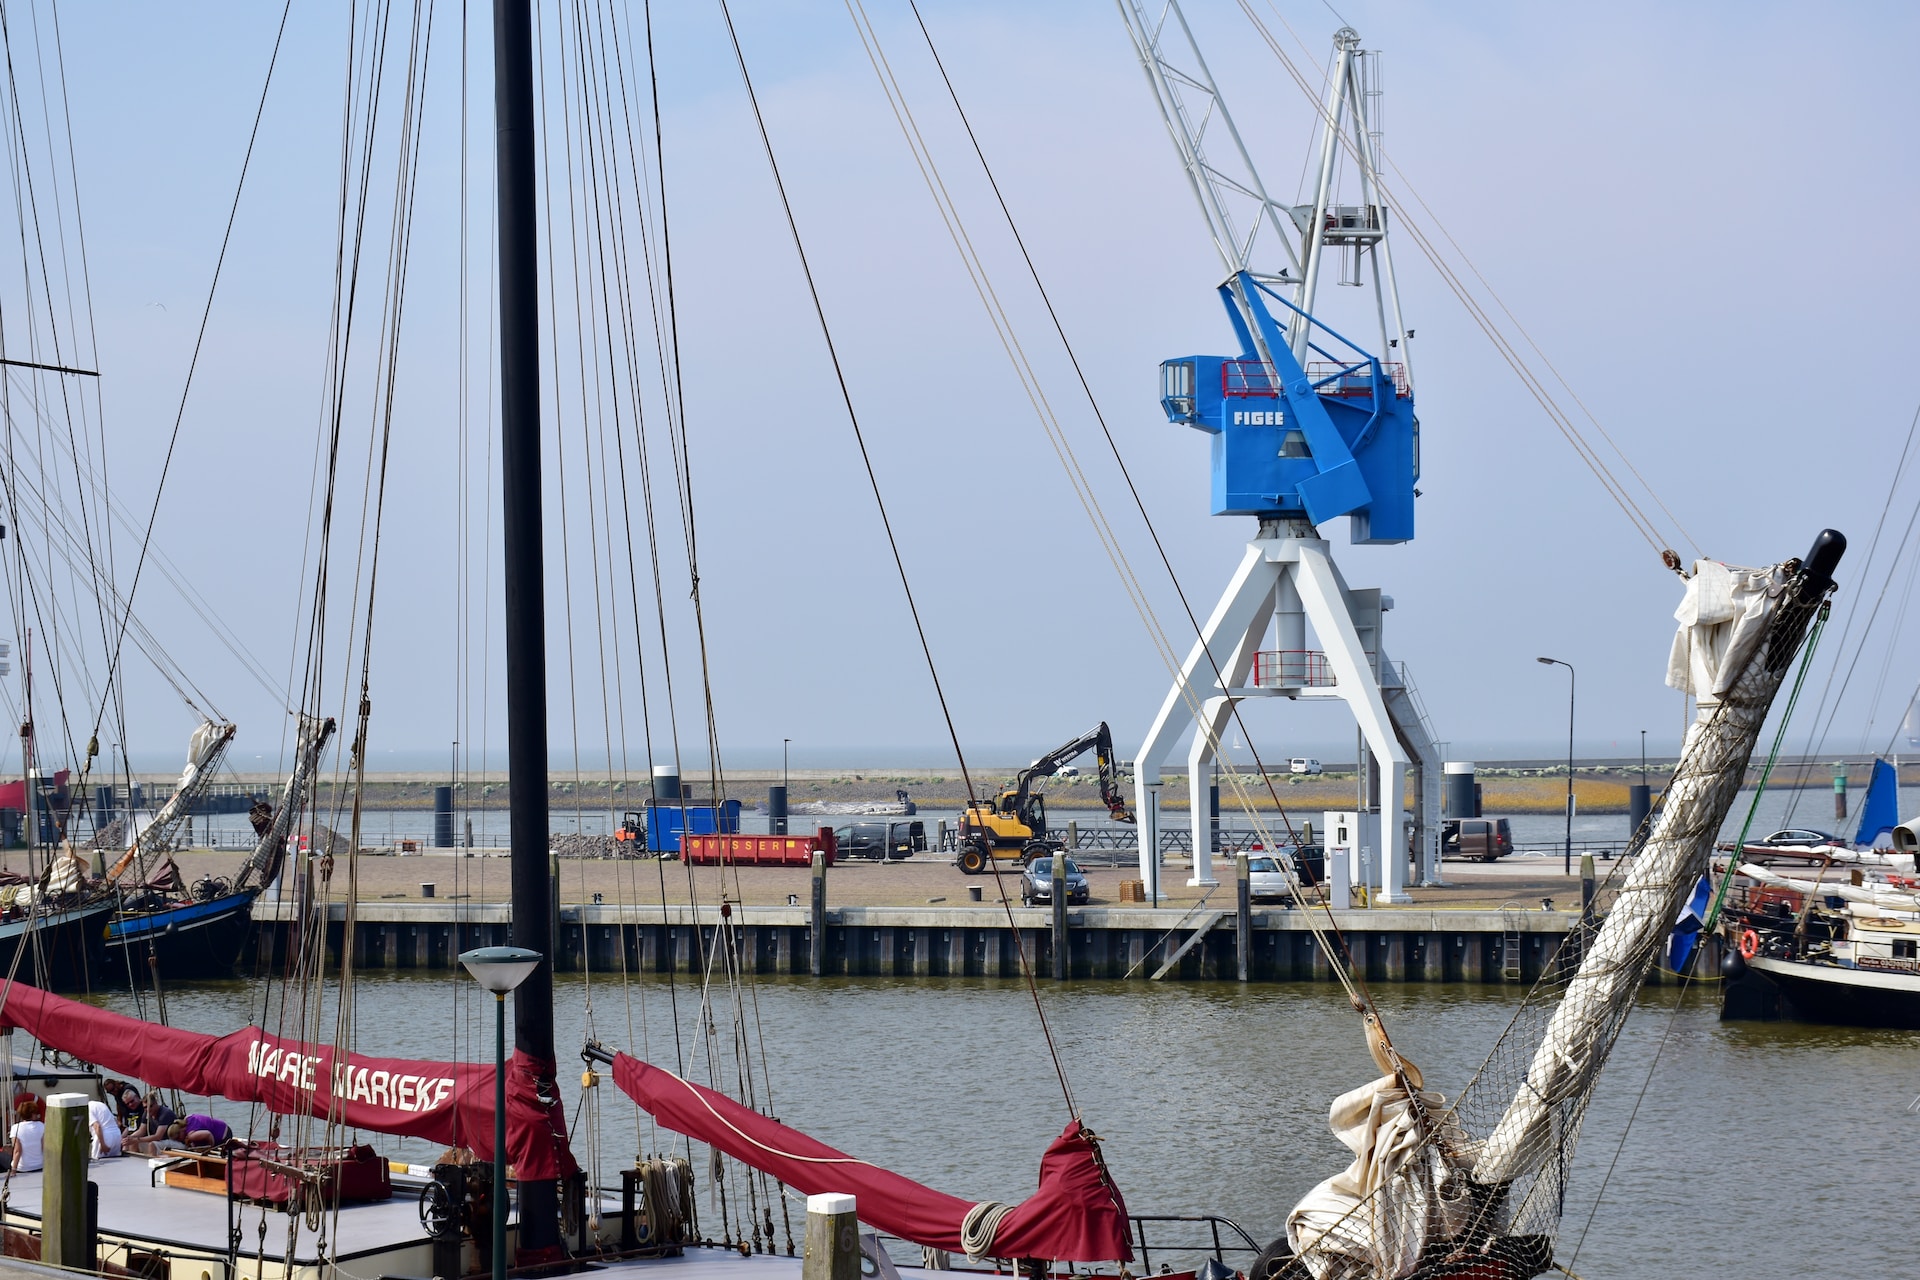 claw crane in a port